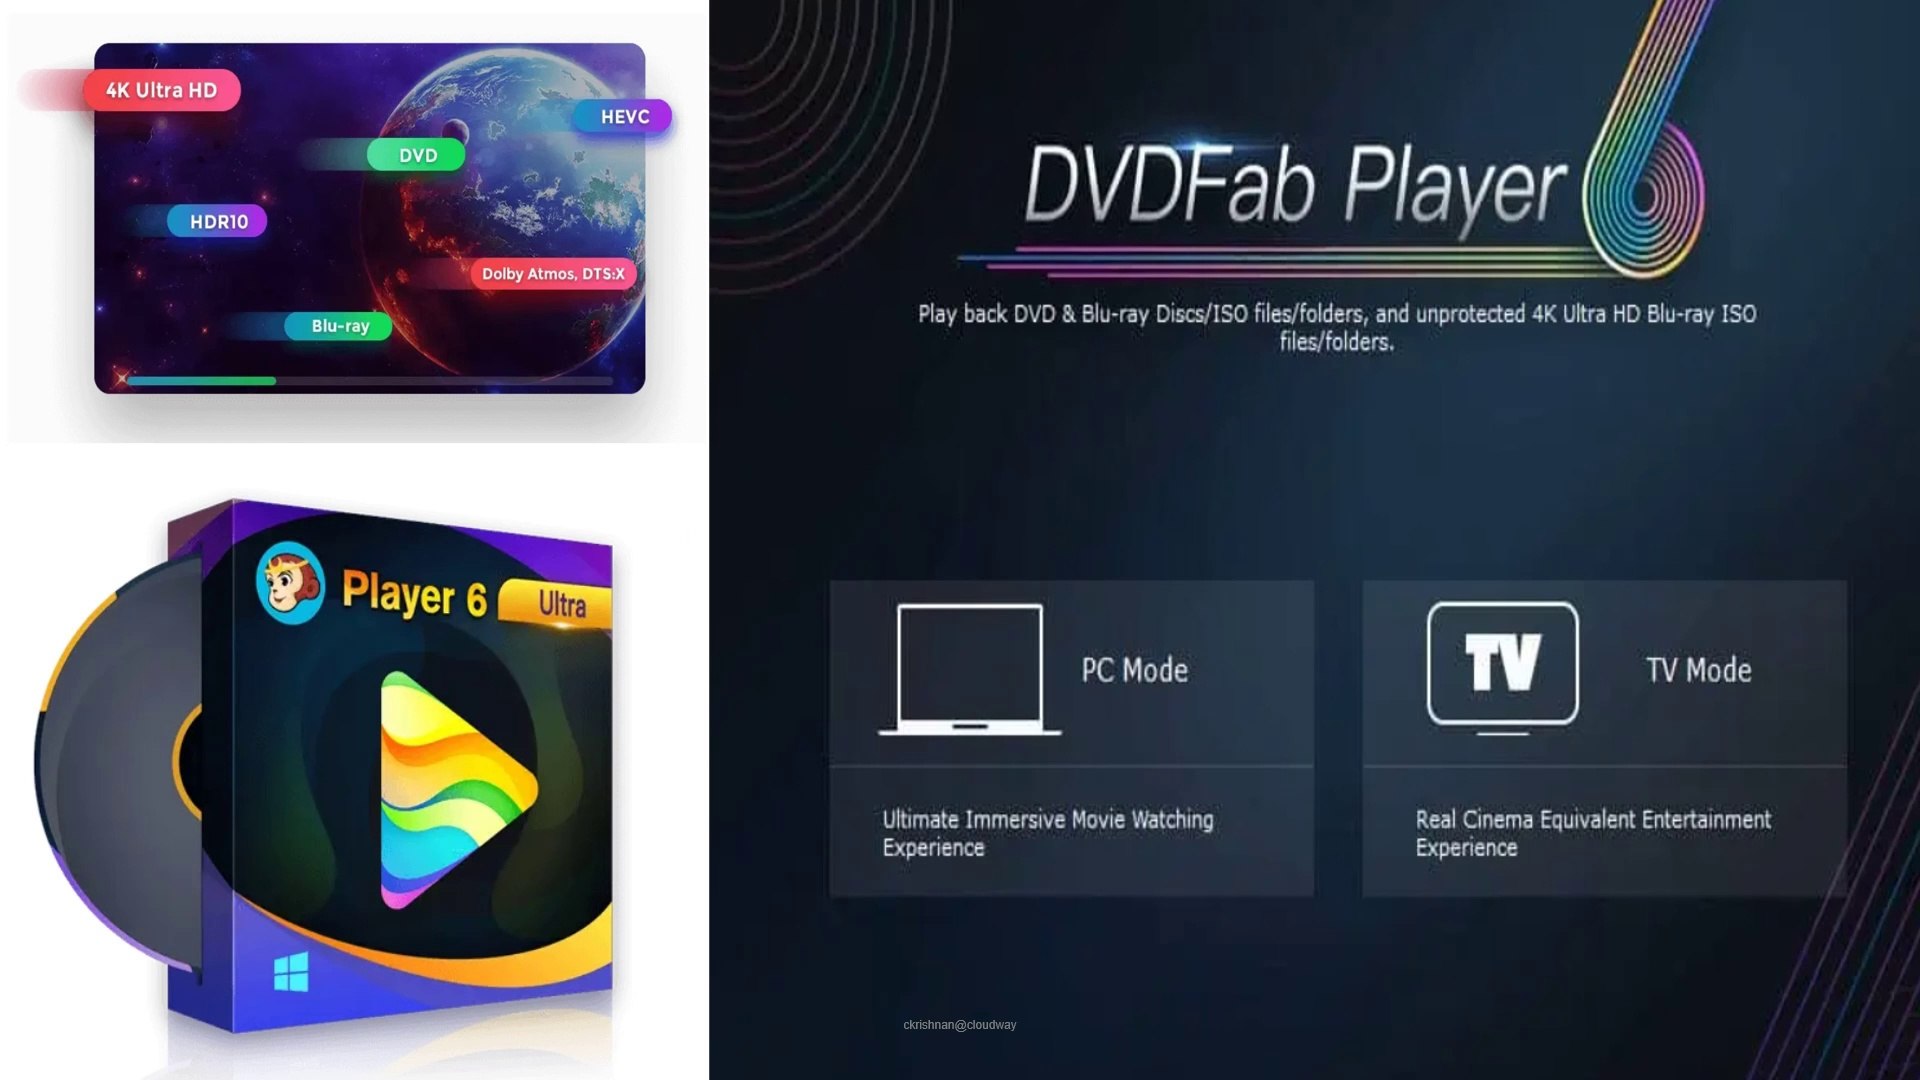 DVDFab Player 6 – The Best Free Video Player | DVDFab Player 6 for Mac |  Best 4K Ultra HD Mac Blu ray Player | DVDFab Media Player for Windows | BEST